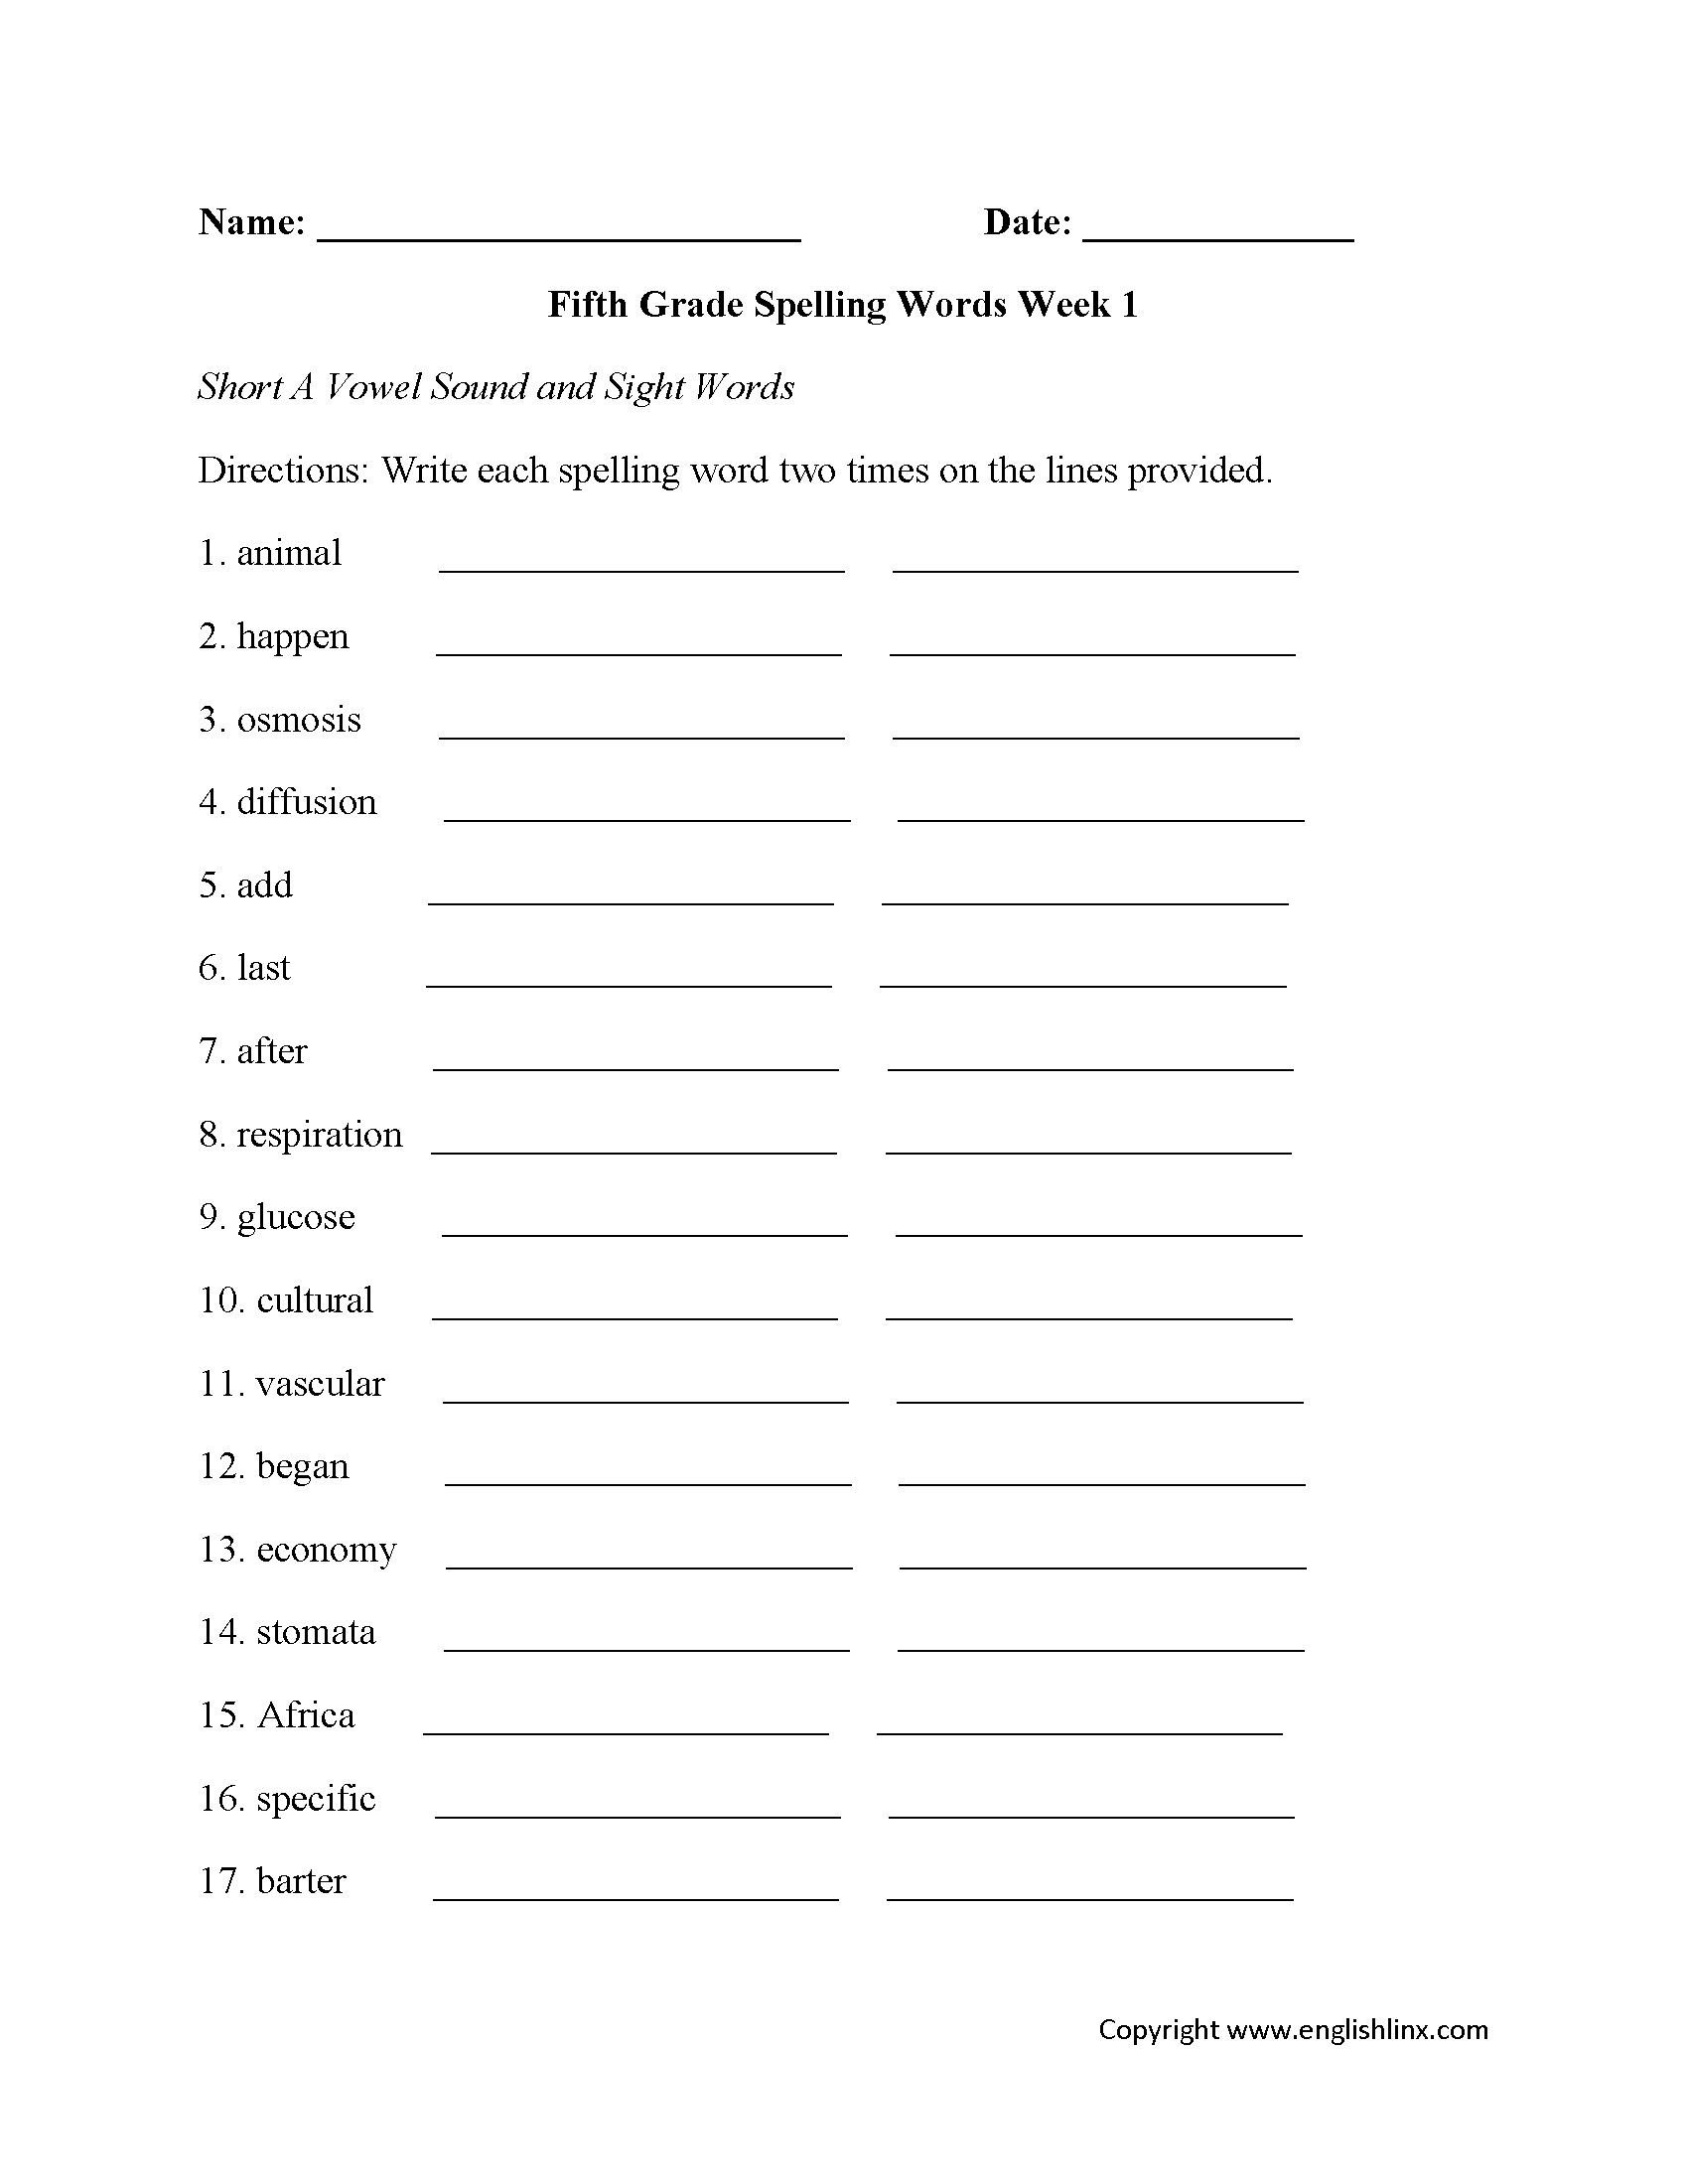 Spelling Worksheets | Fifth Grade Spelling Worksheets - Free Printable Spelling Worksheets For 5Th Grade